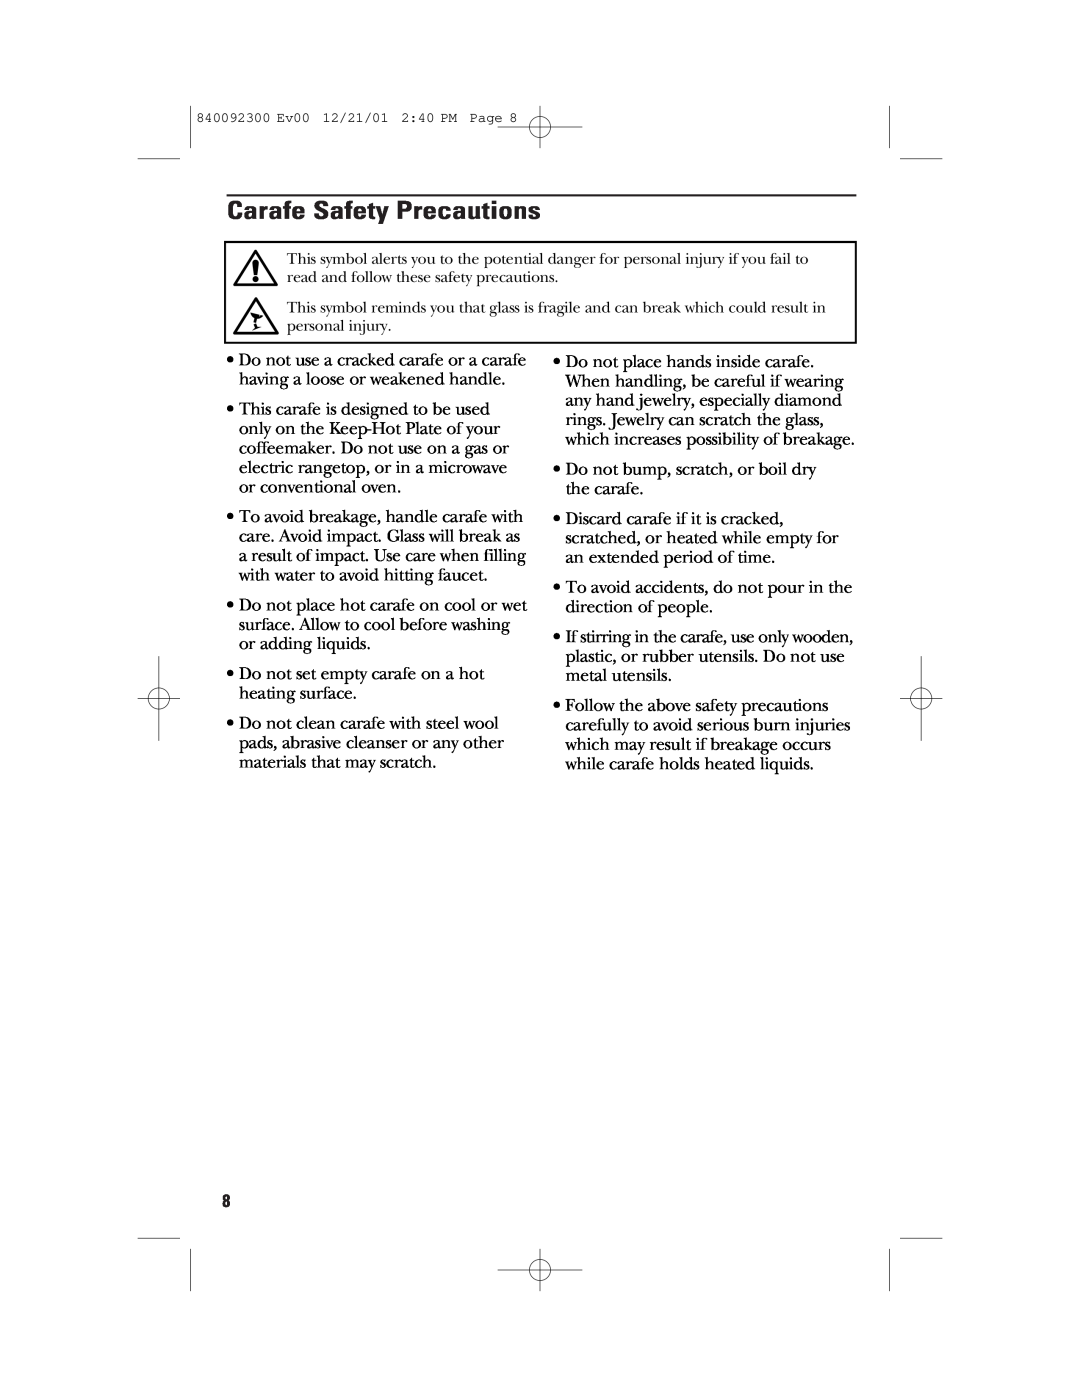 GE 840092300, 106804 manual Carafe Safety Precautions 